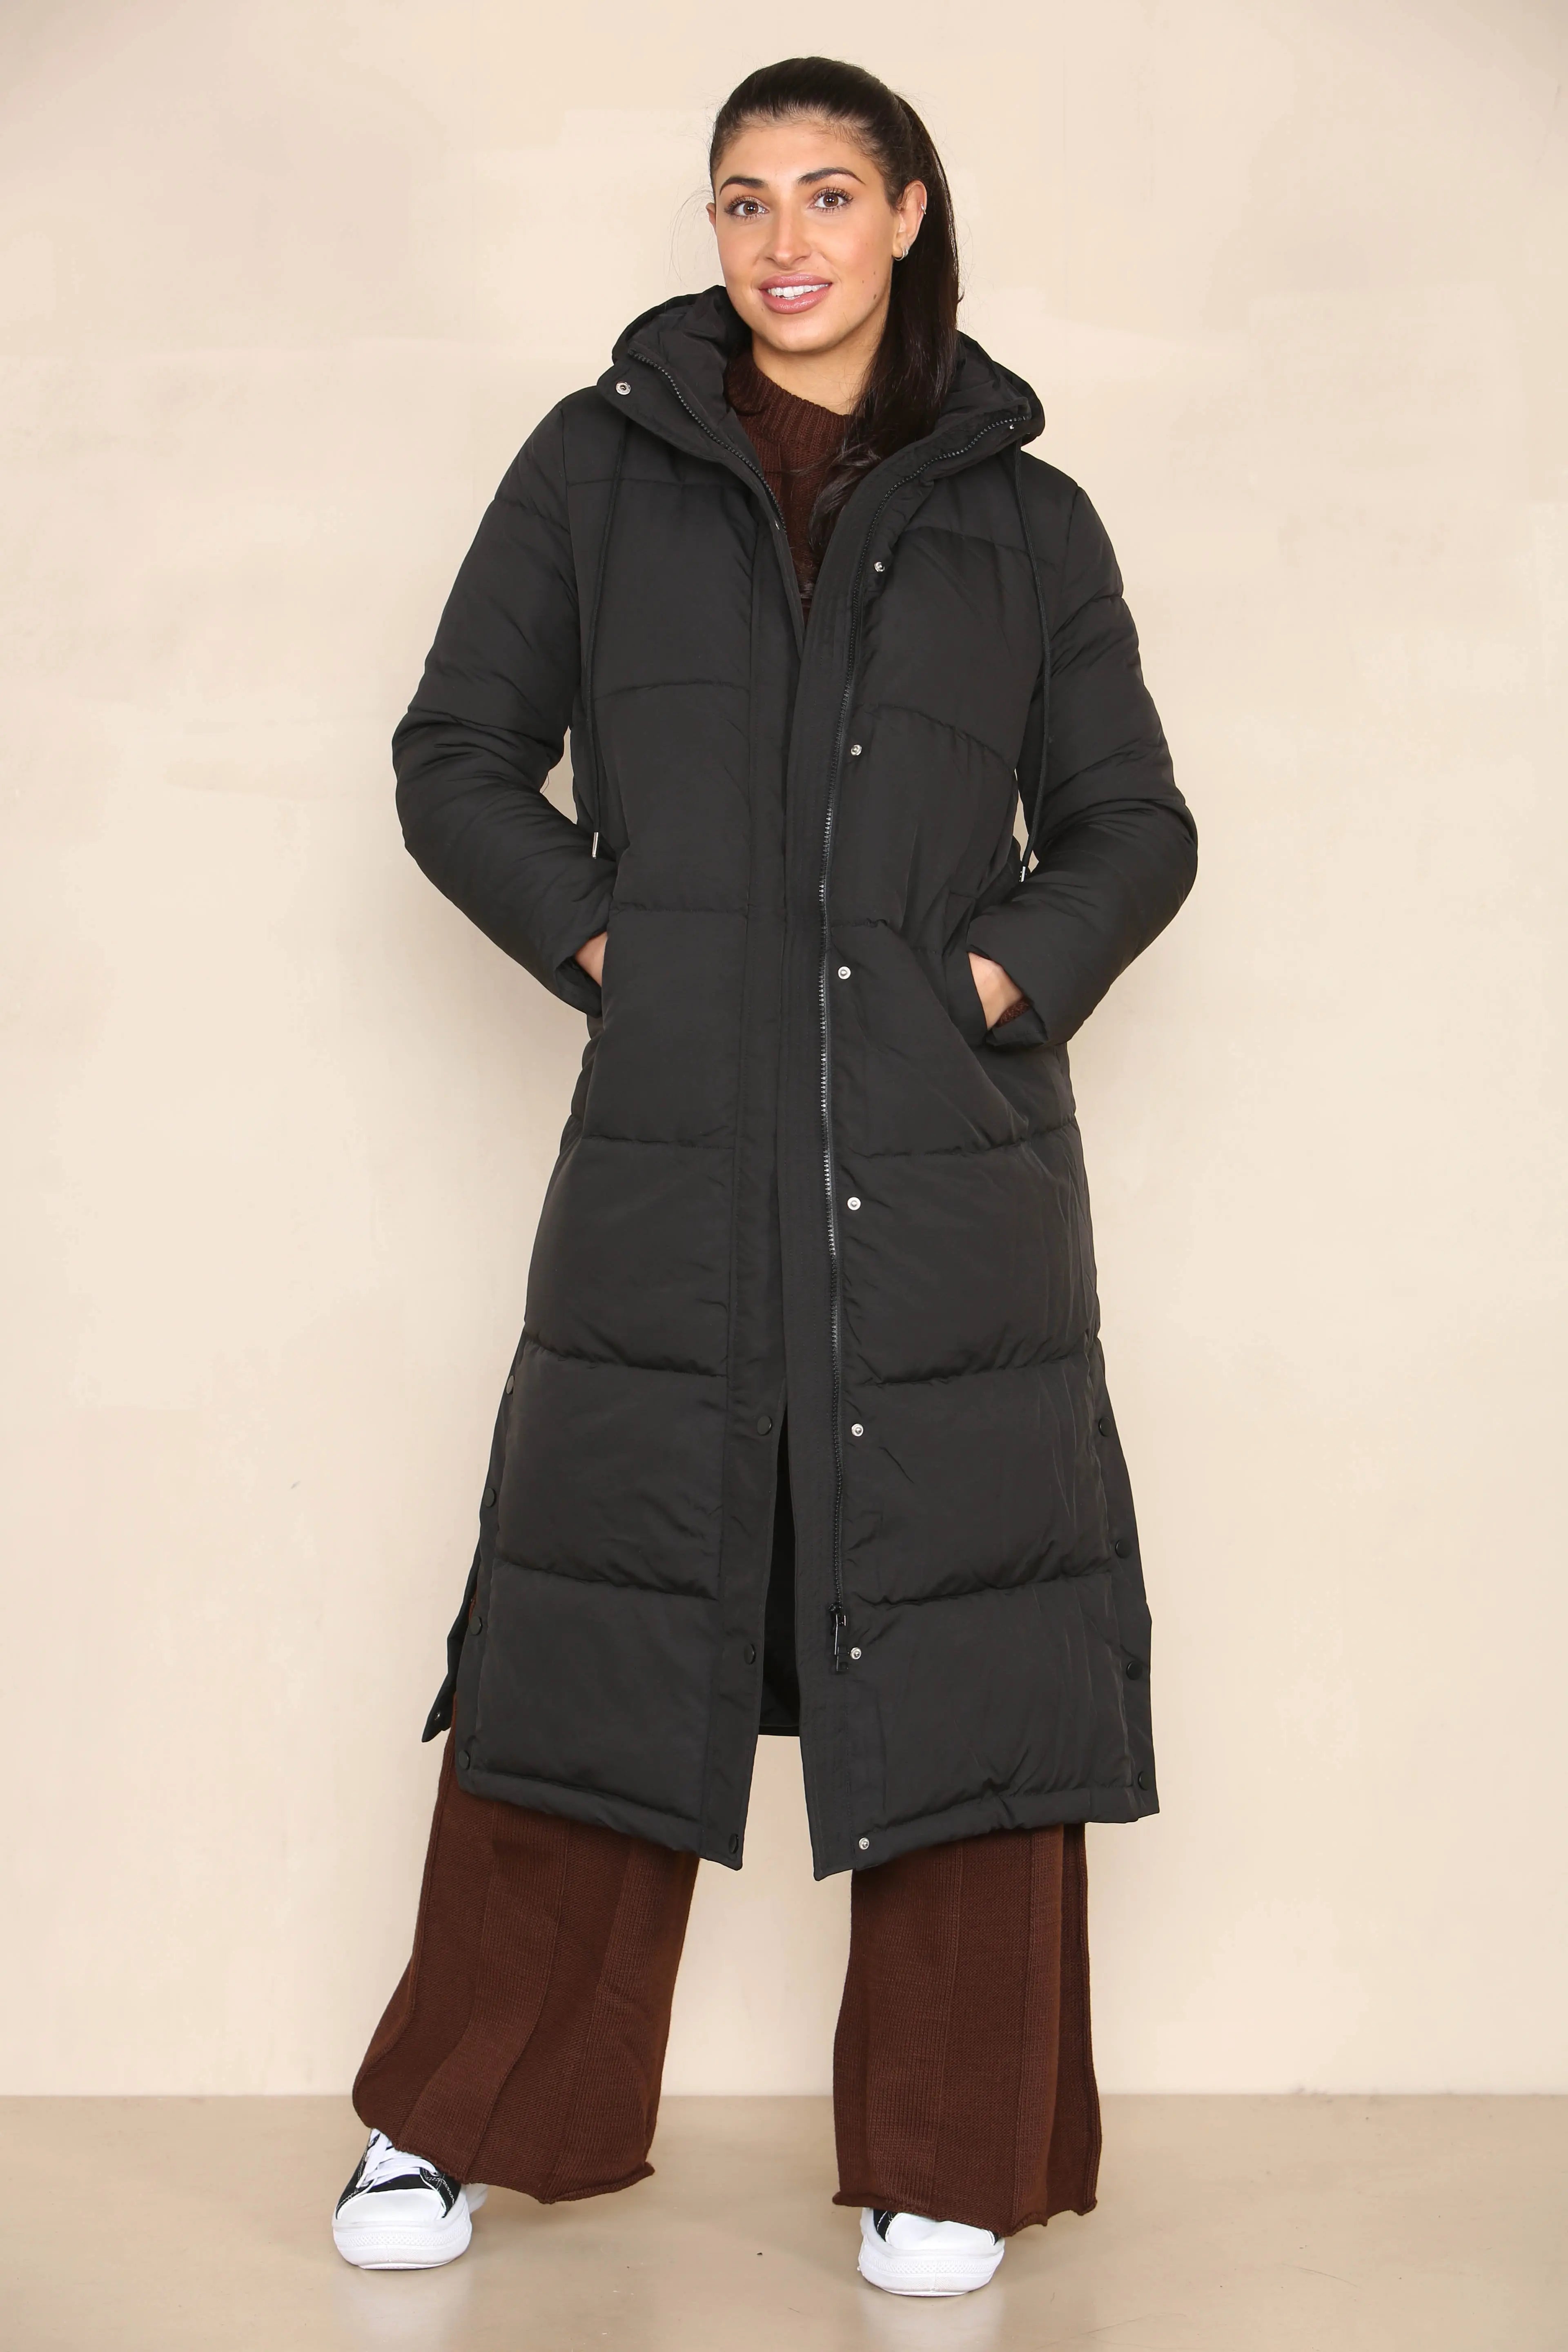 KATCH ME Black Winter Chic Side Slit Hooded Zip-Up Thermal Cotton Coat Coat 46.99